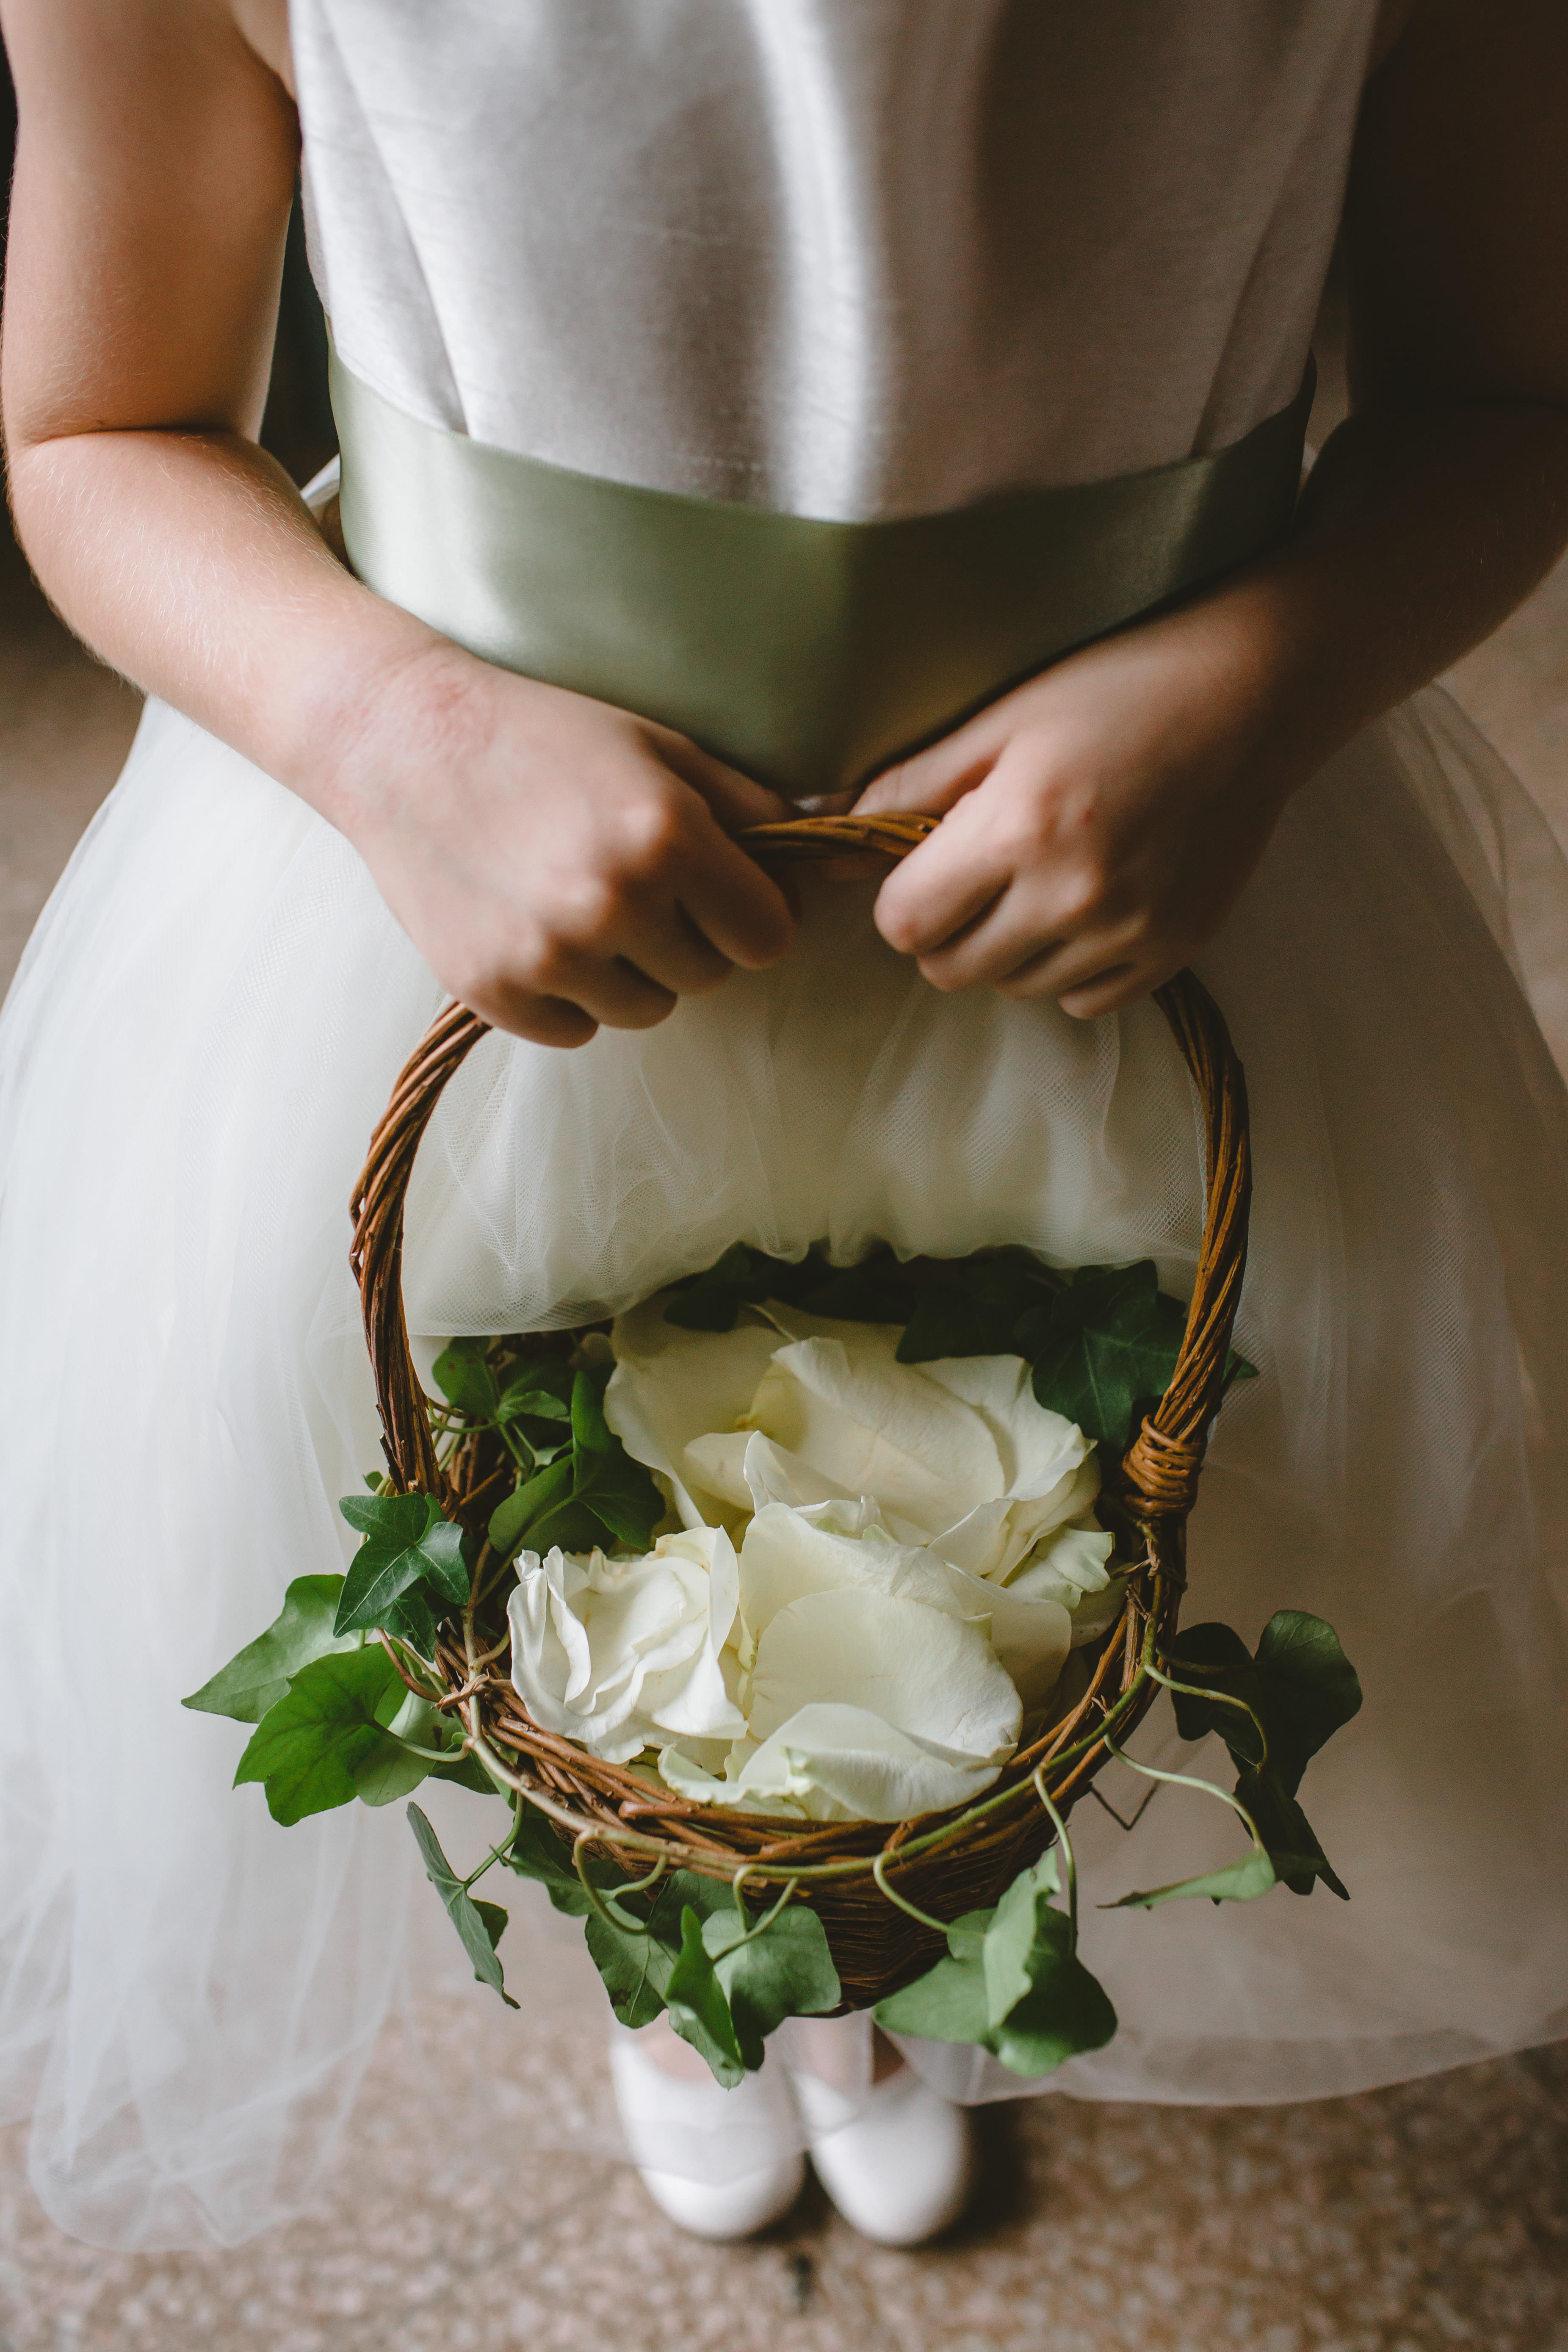 Wedding flower girl basket with petals.